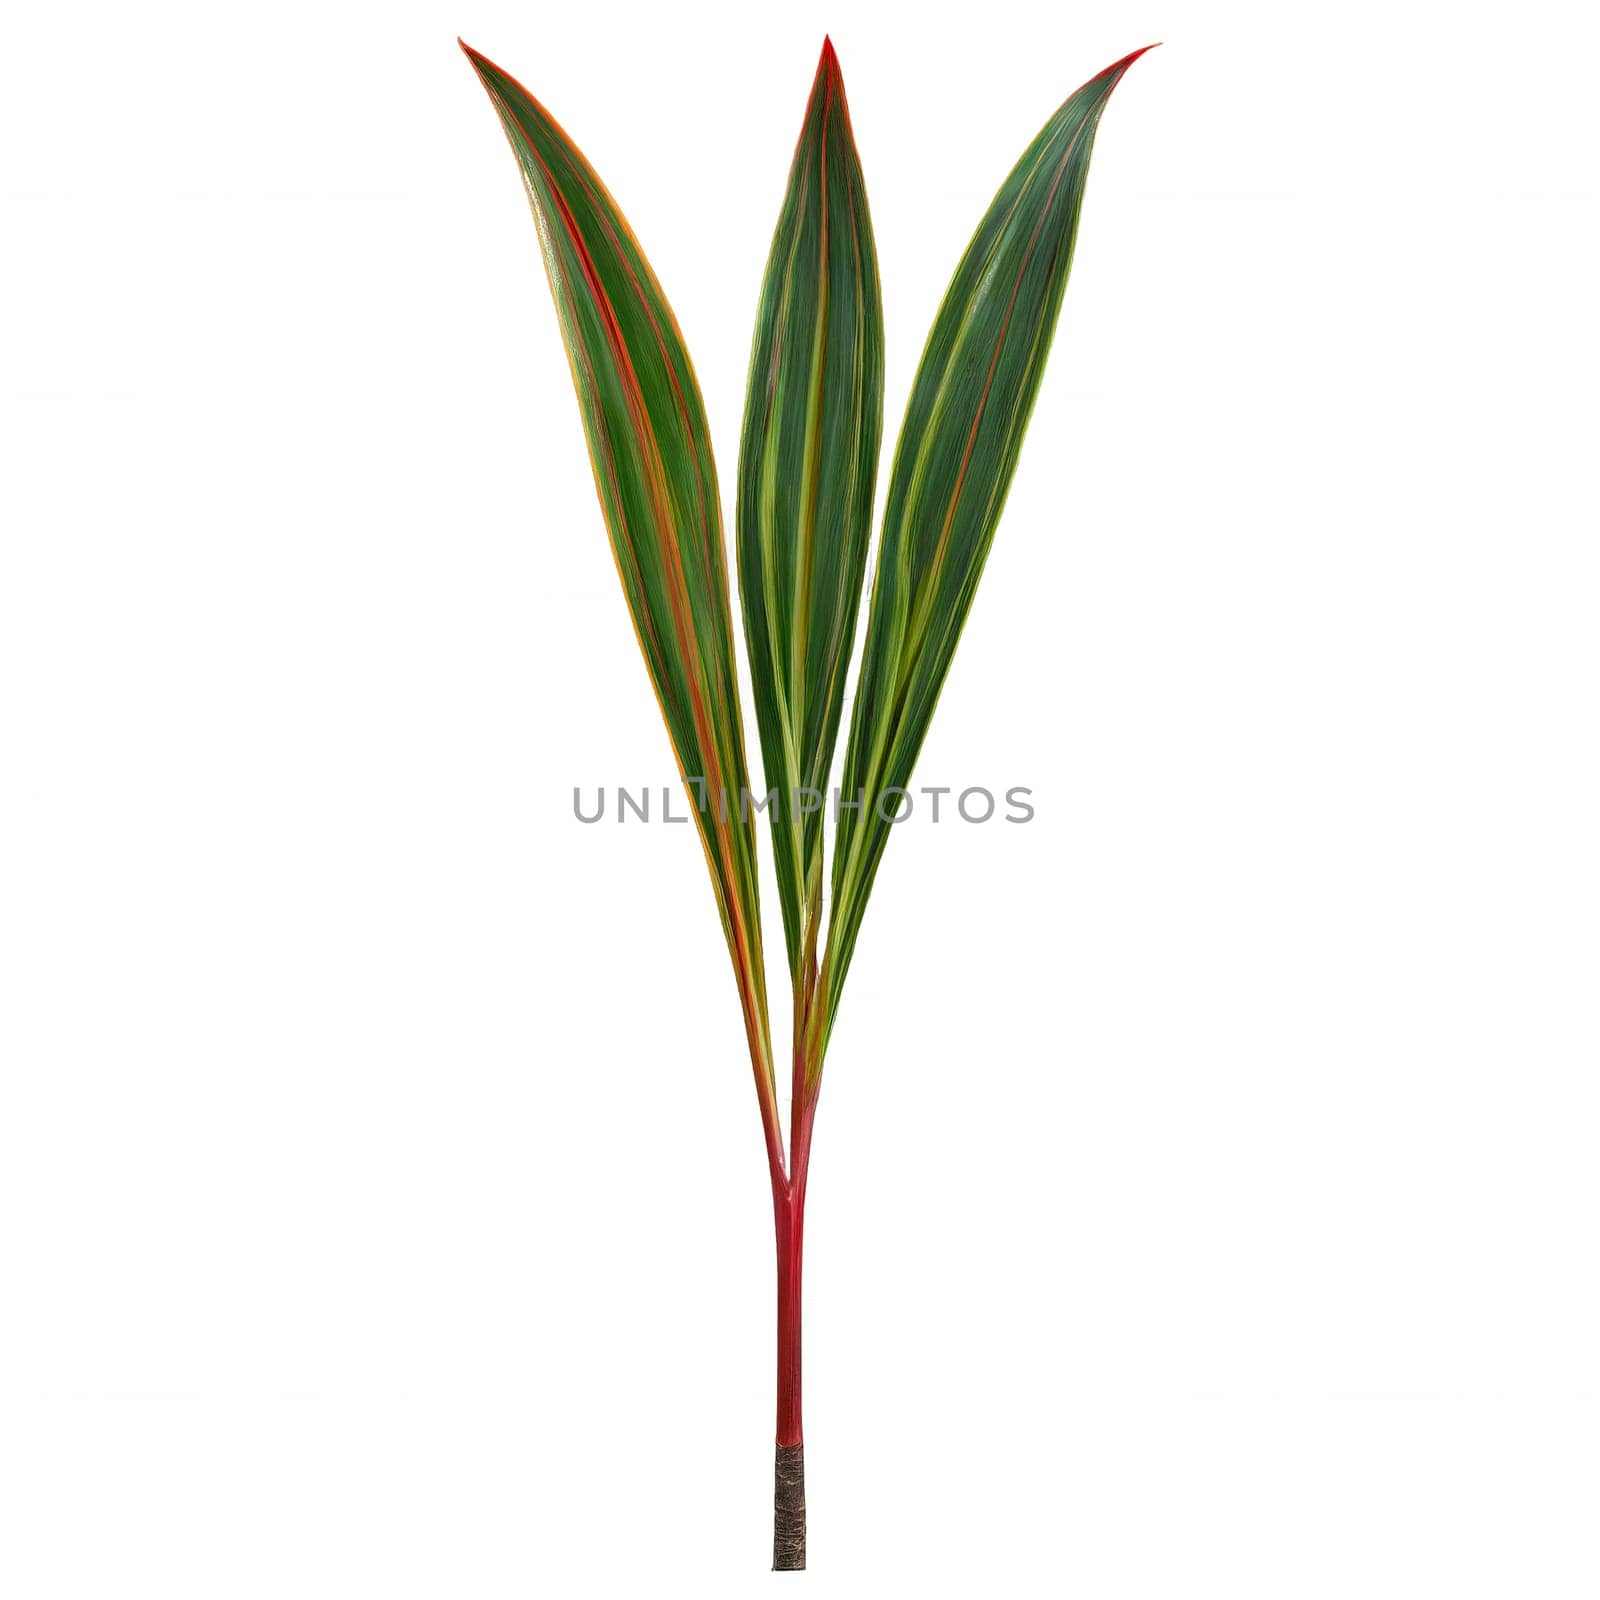 Dracaena leaf long sword shaped leaf with red and green striped variegation Dracaena marginata by Matiunina